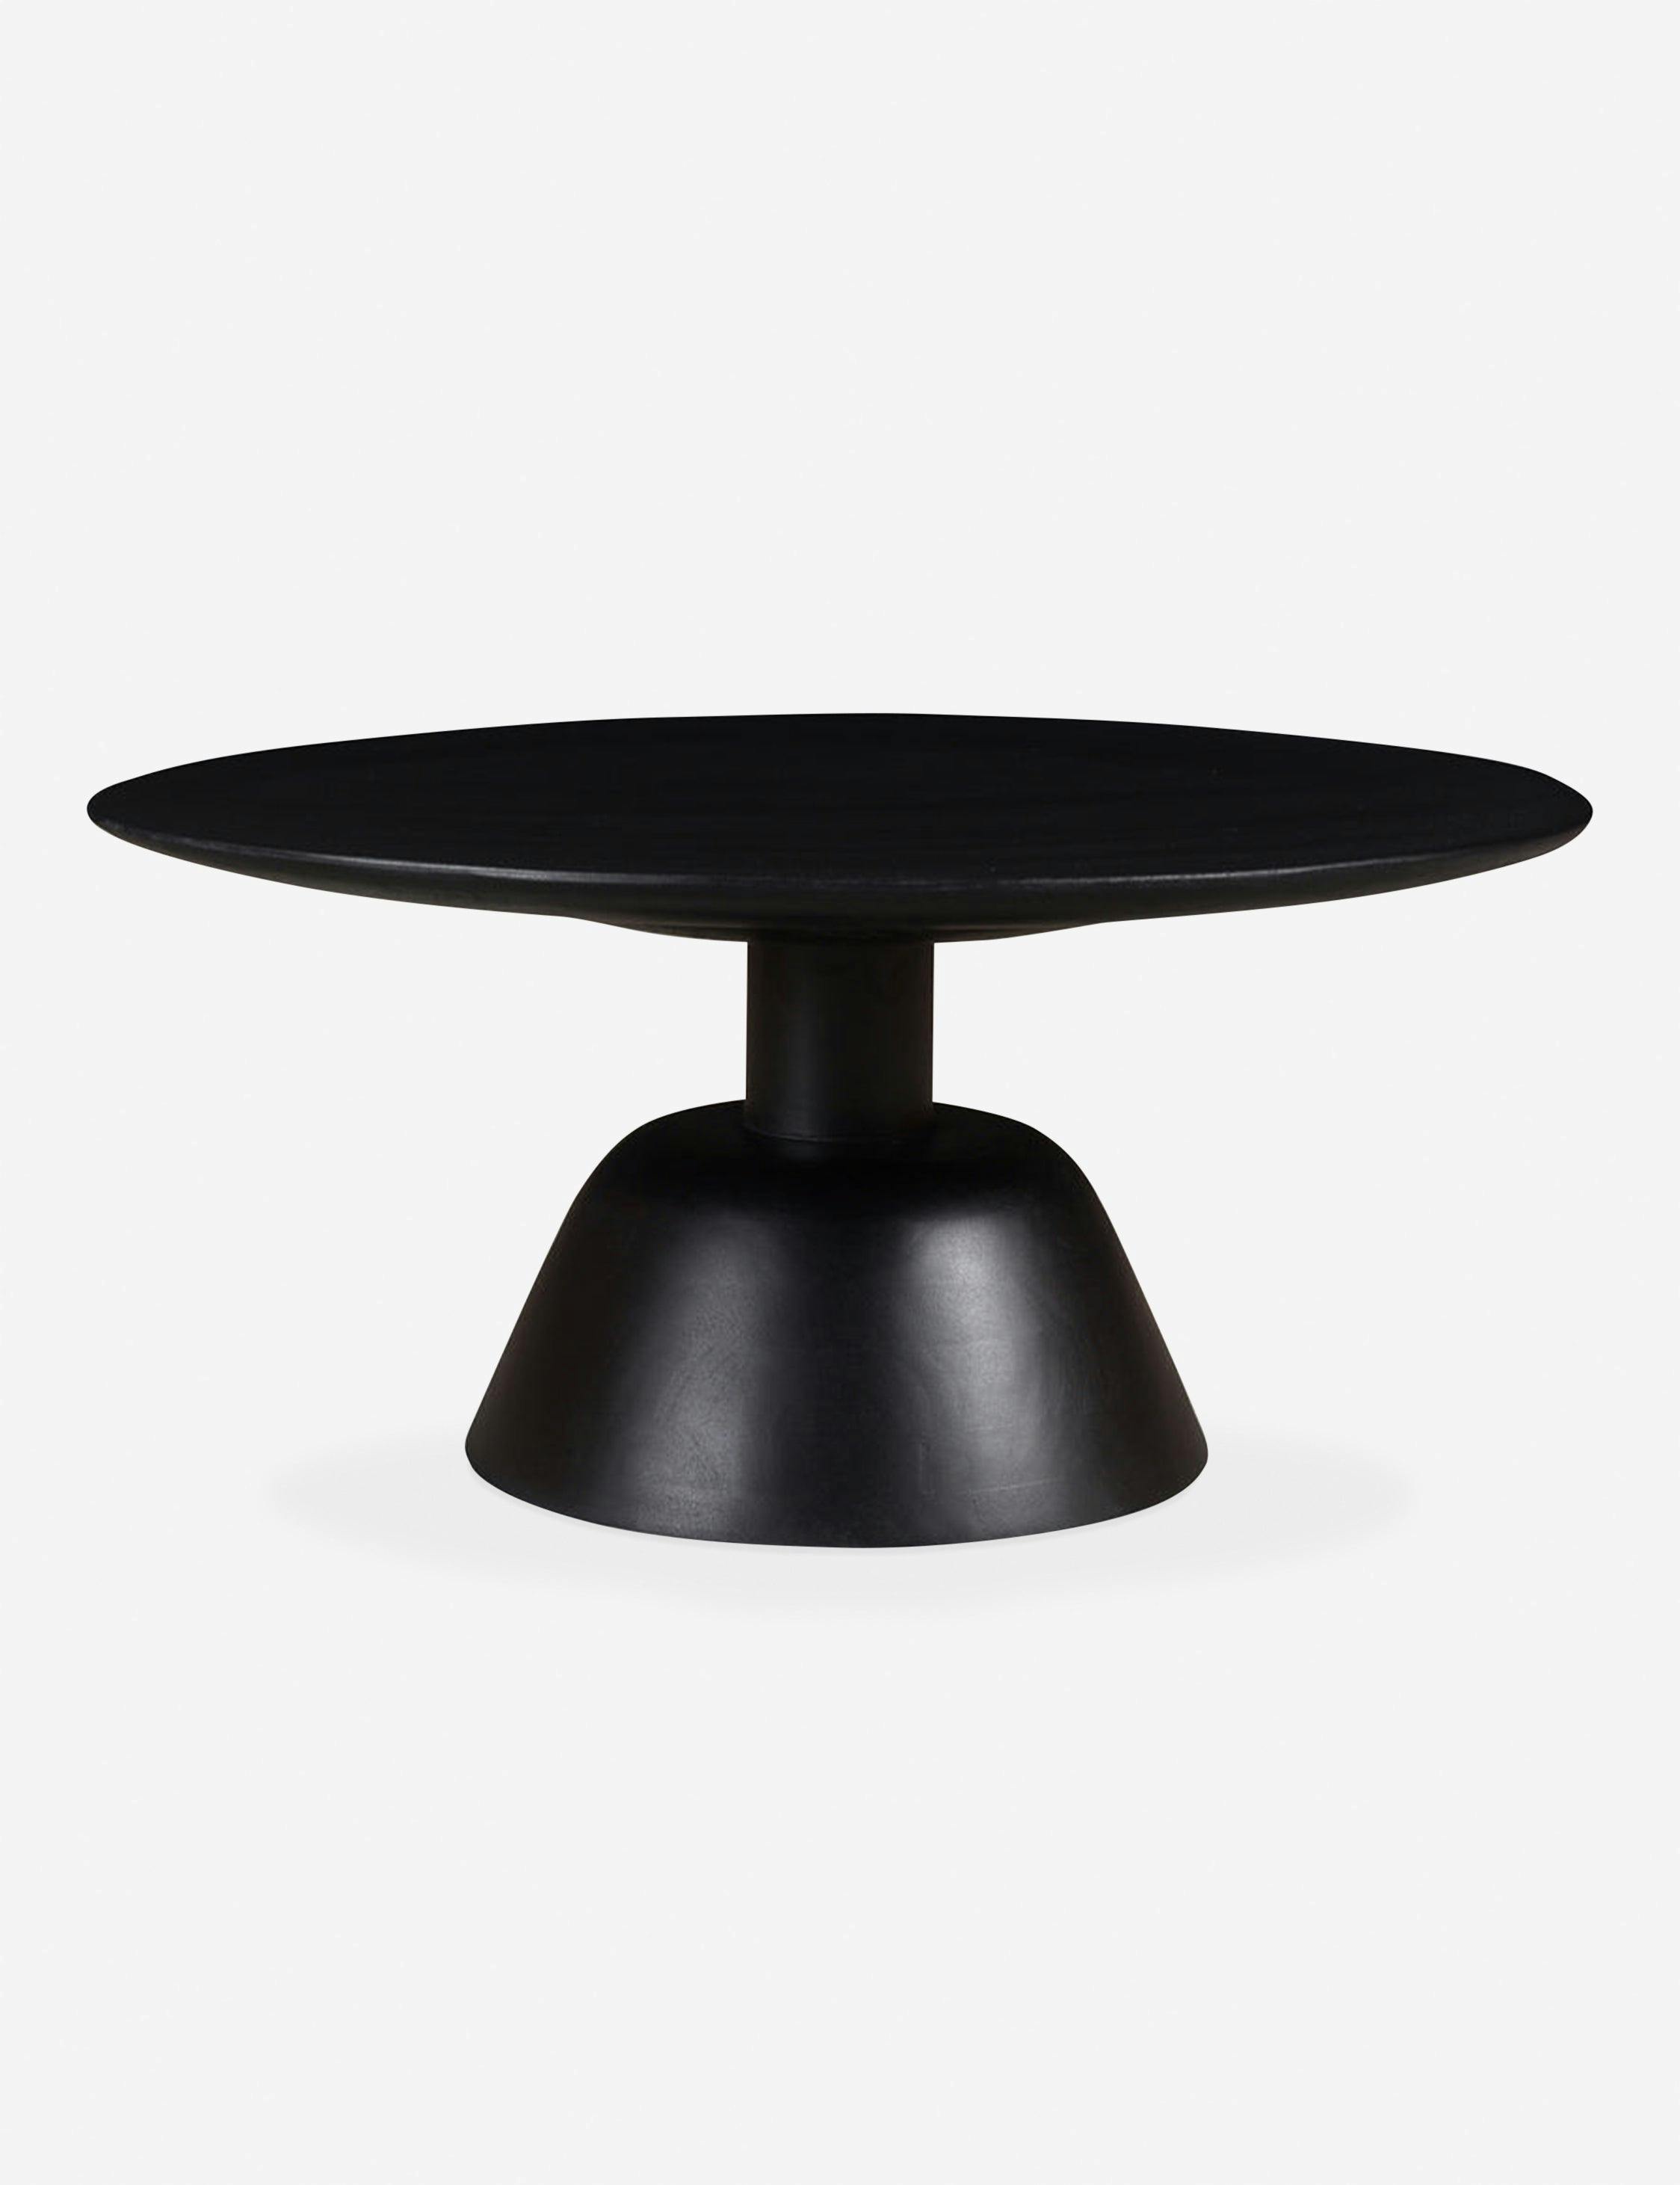 Charcoal Black Mango Wood Round Coffee Table - 55 lb Capacity